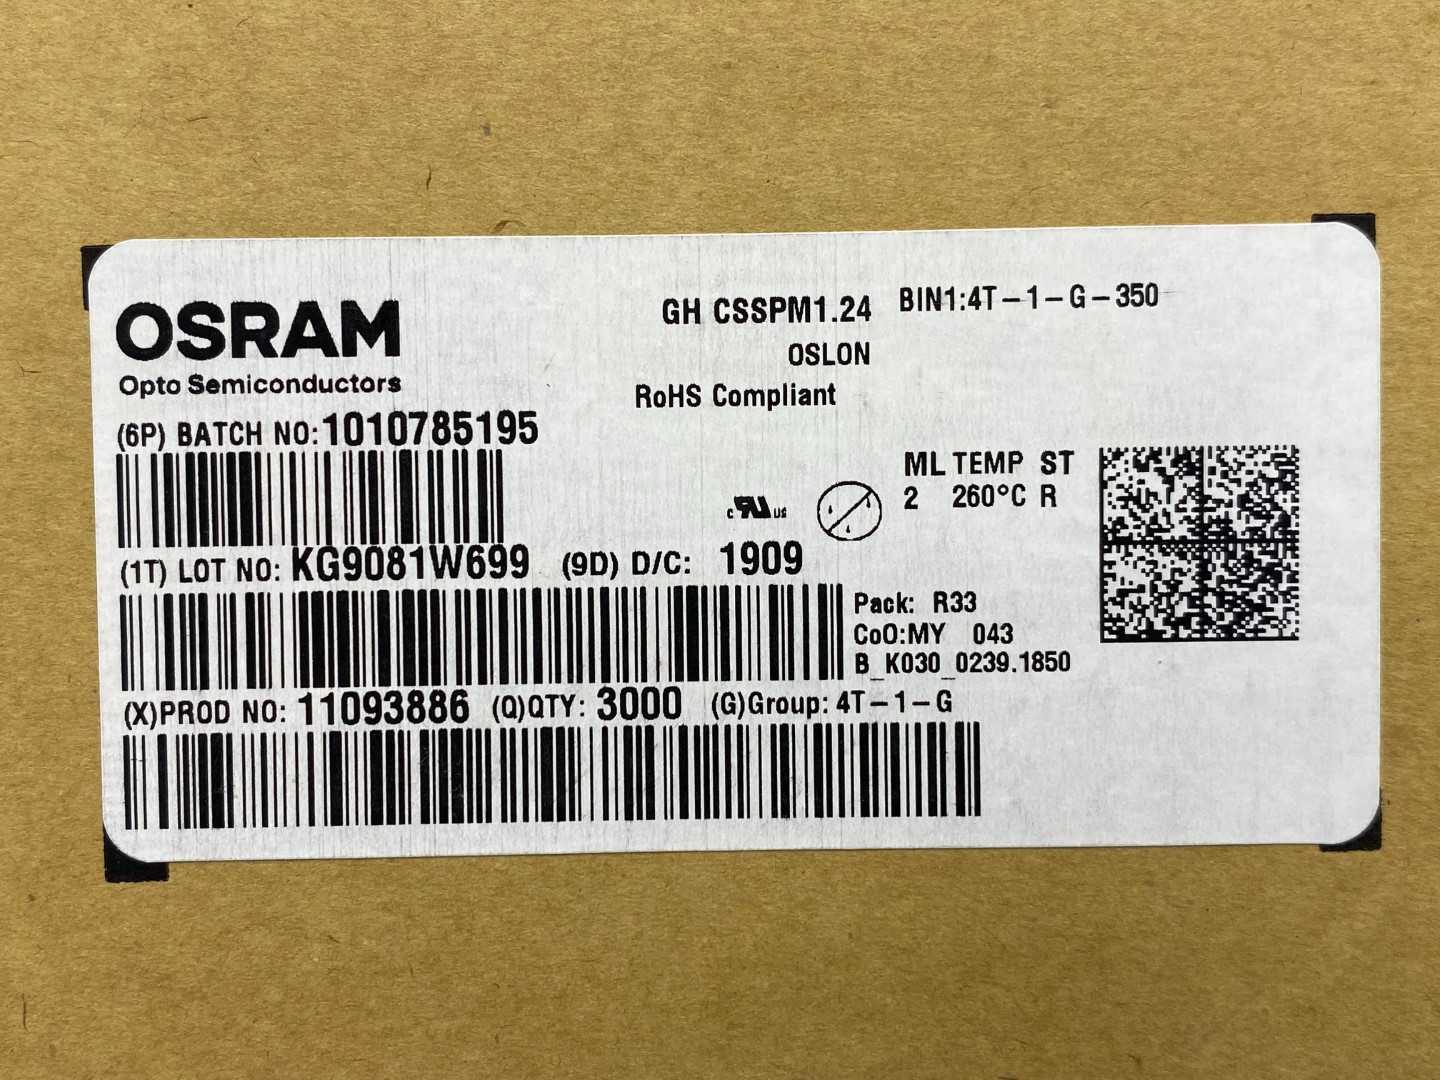 OSRAM Opto Semiconductors RED LED OSLON SSL 120 GH CSSPM1.24-4T2U-1-1-350-R33